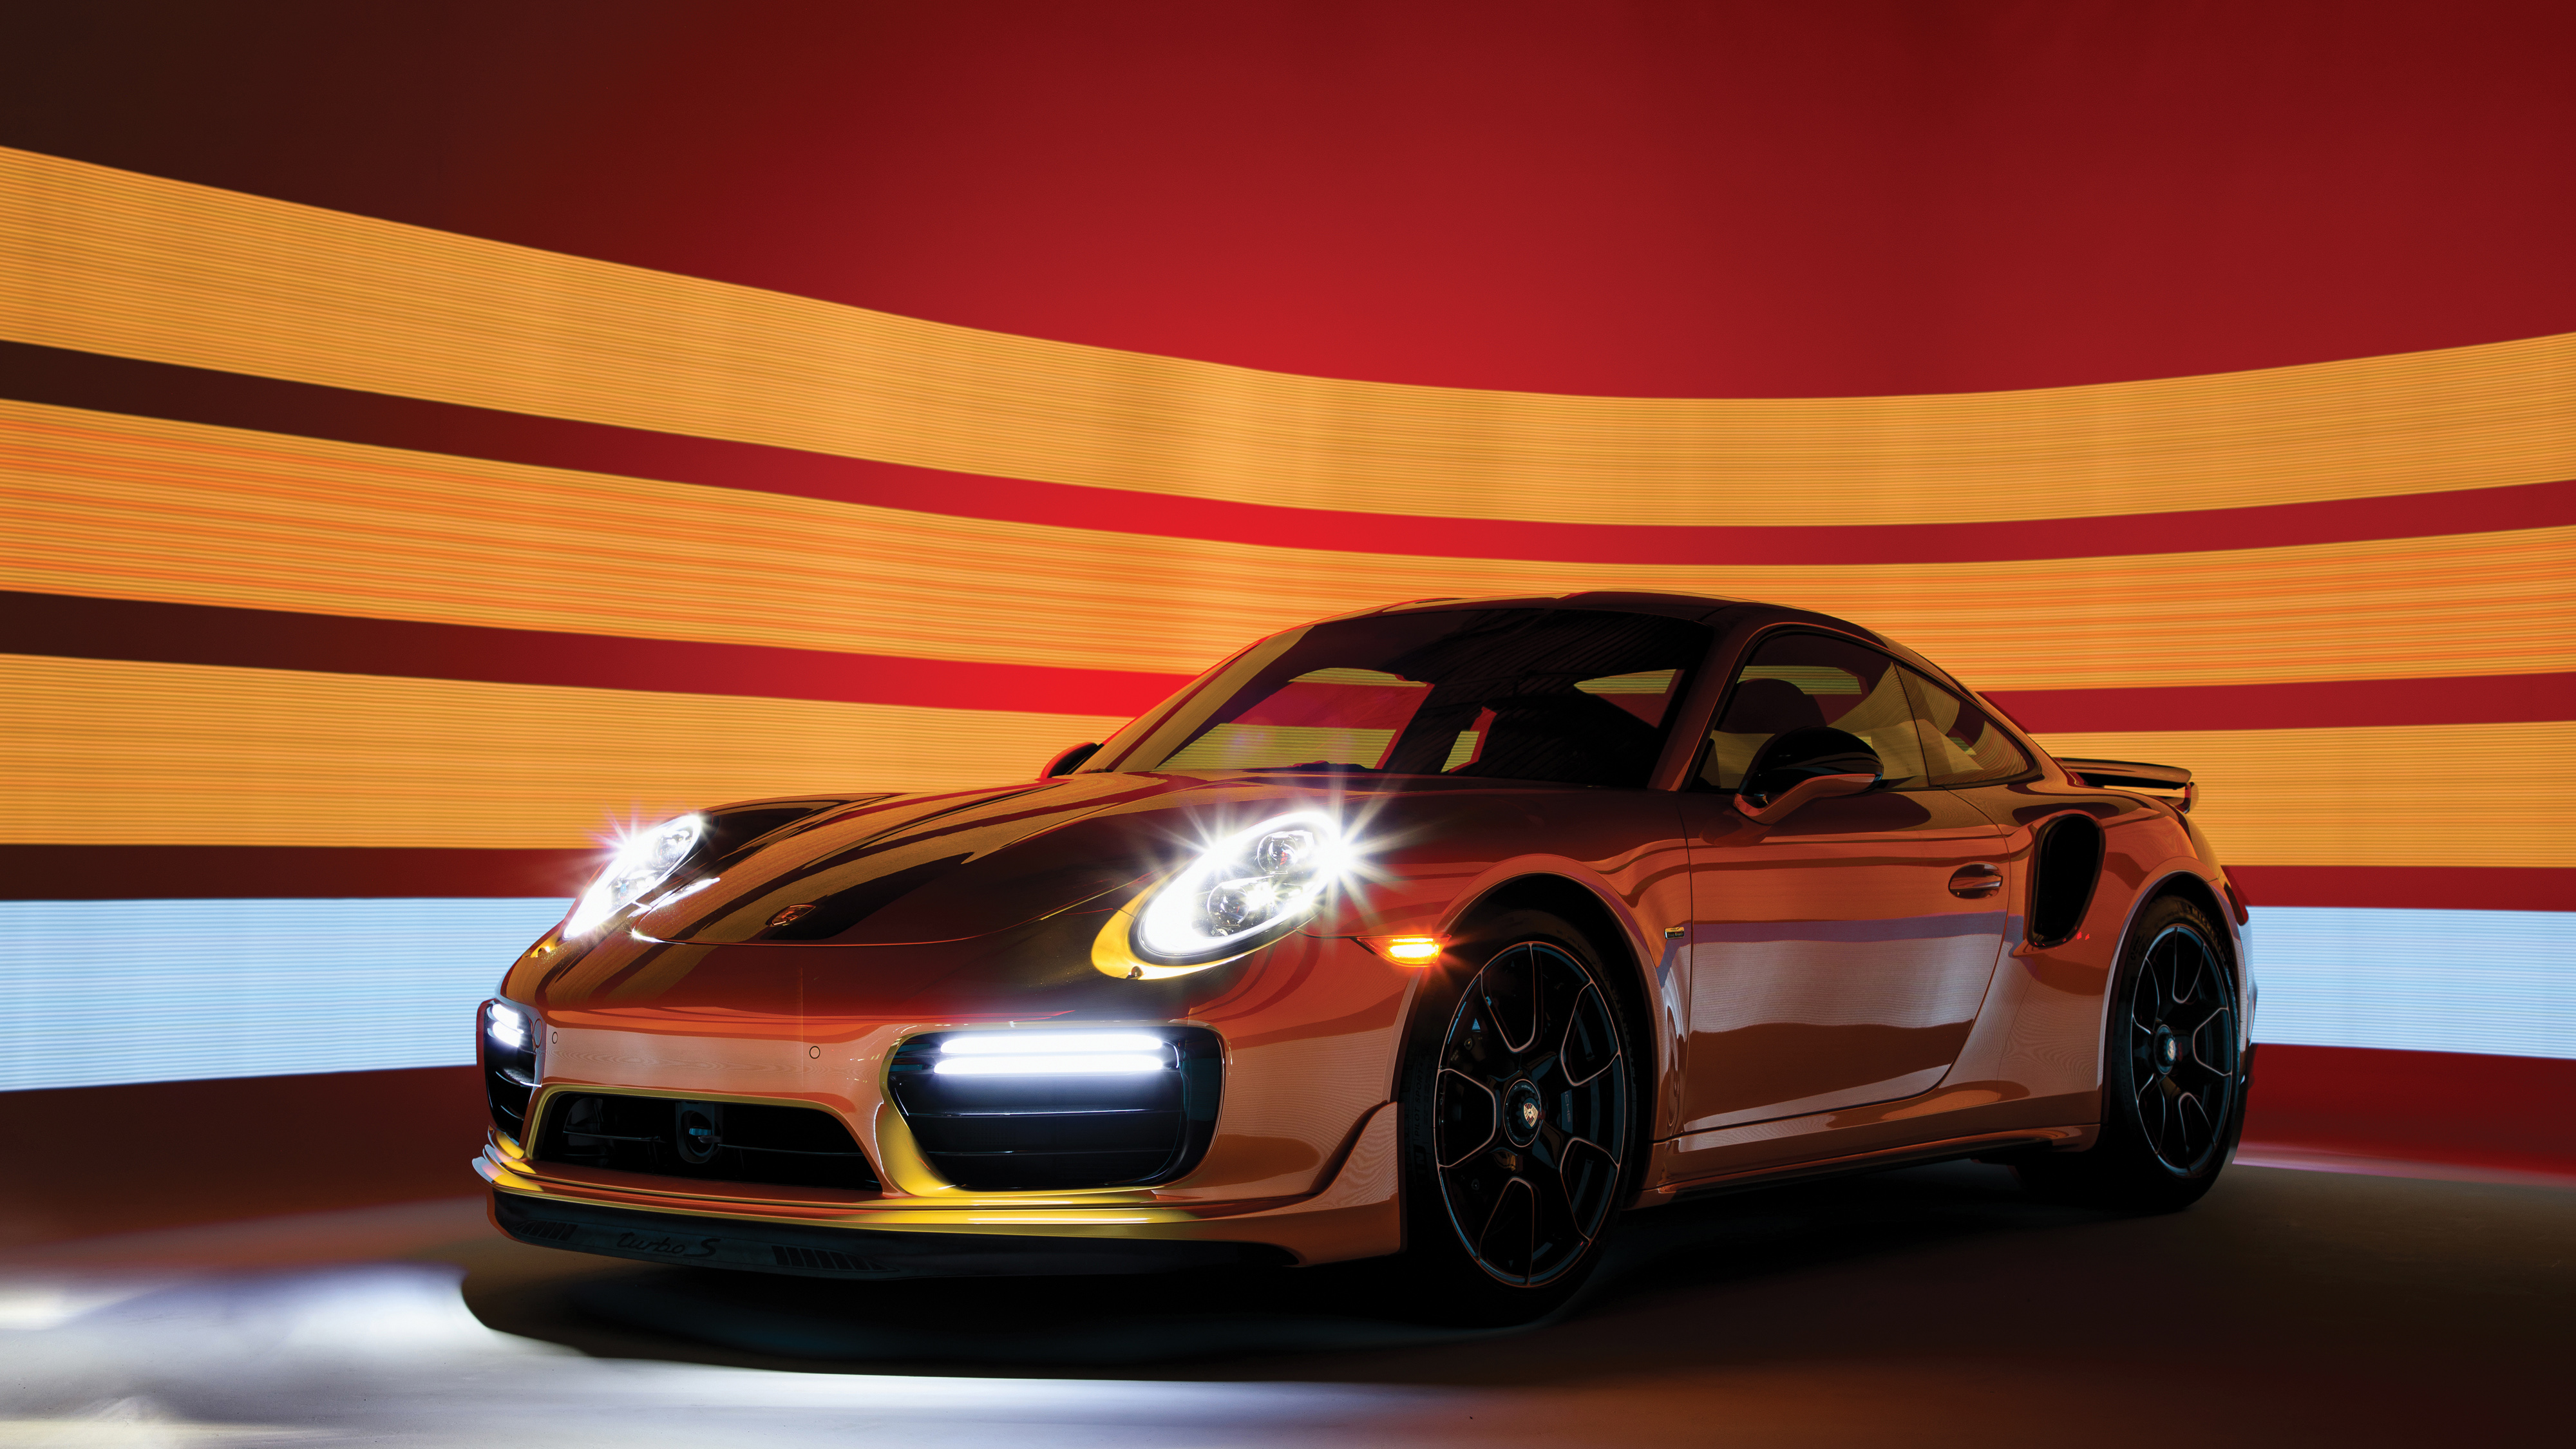 Porsche Panamera Turbo S Executive Exclusive Series Wallpapers